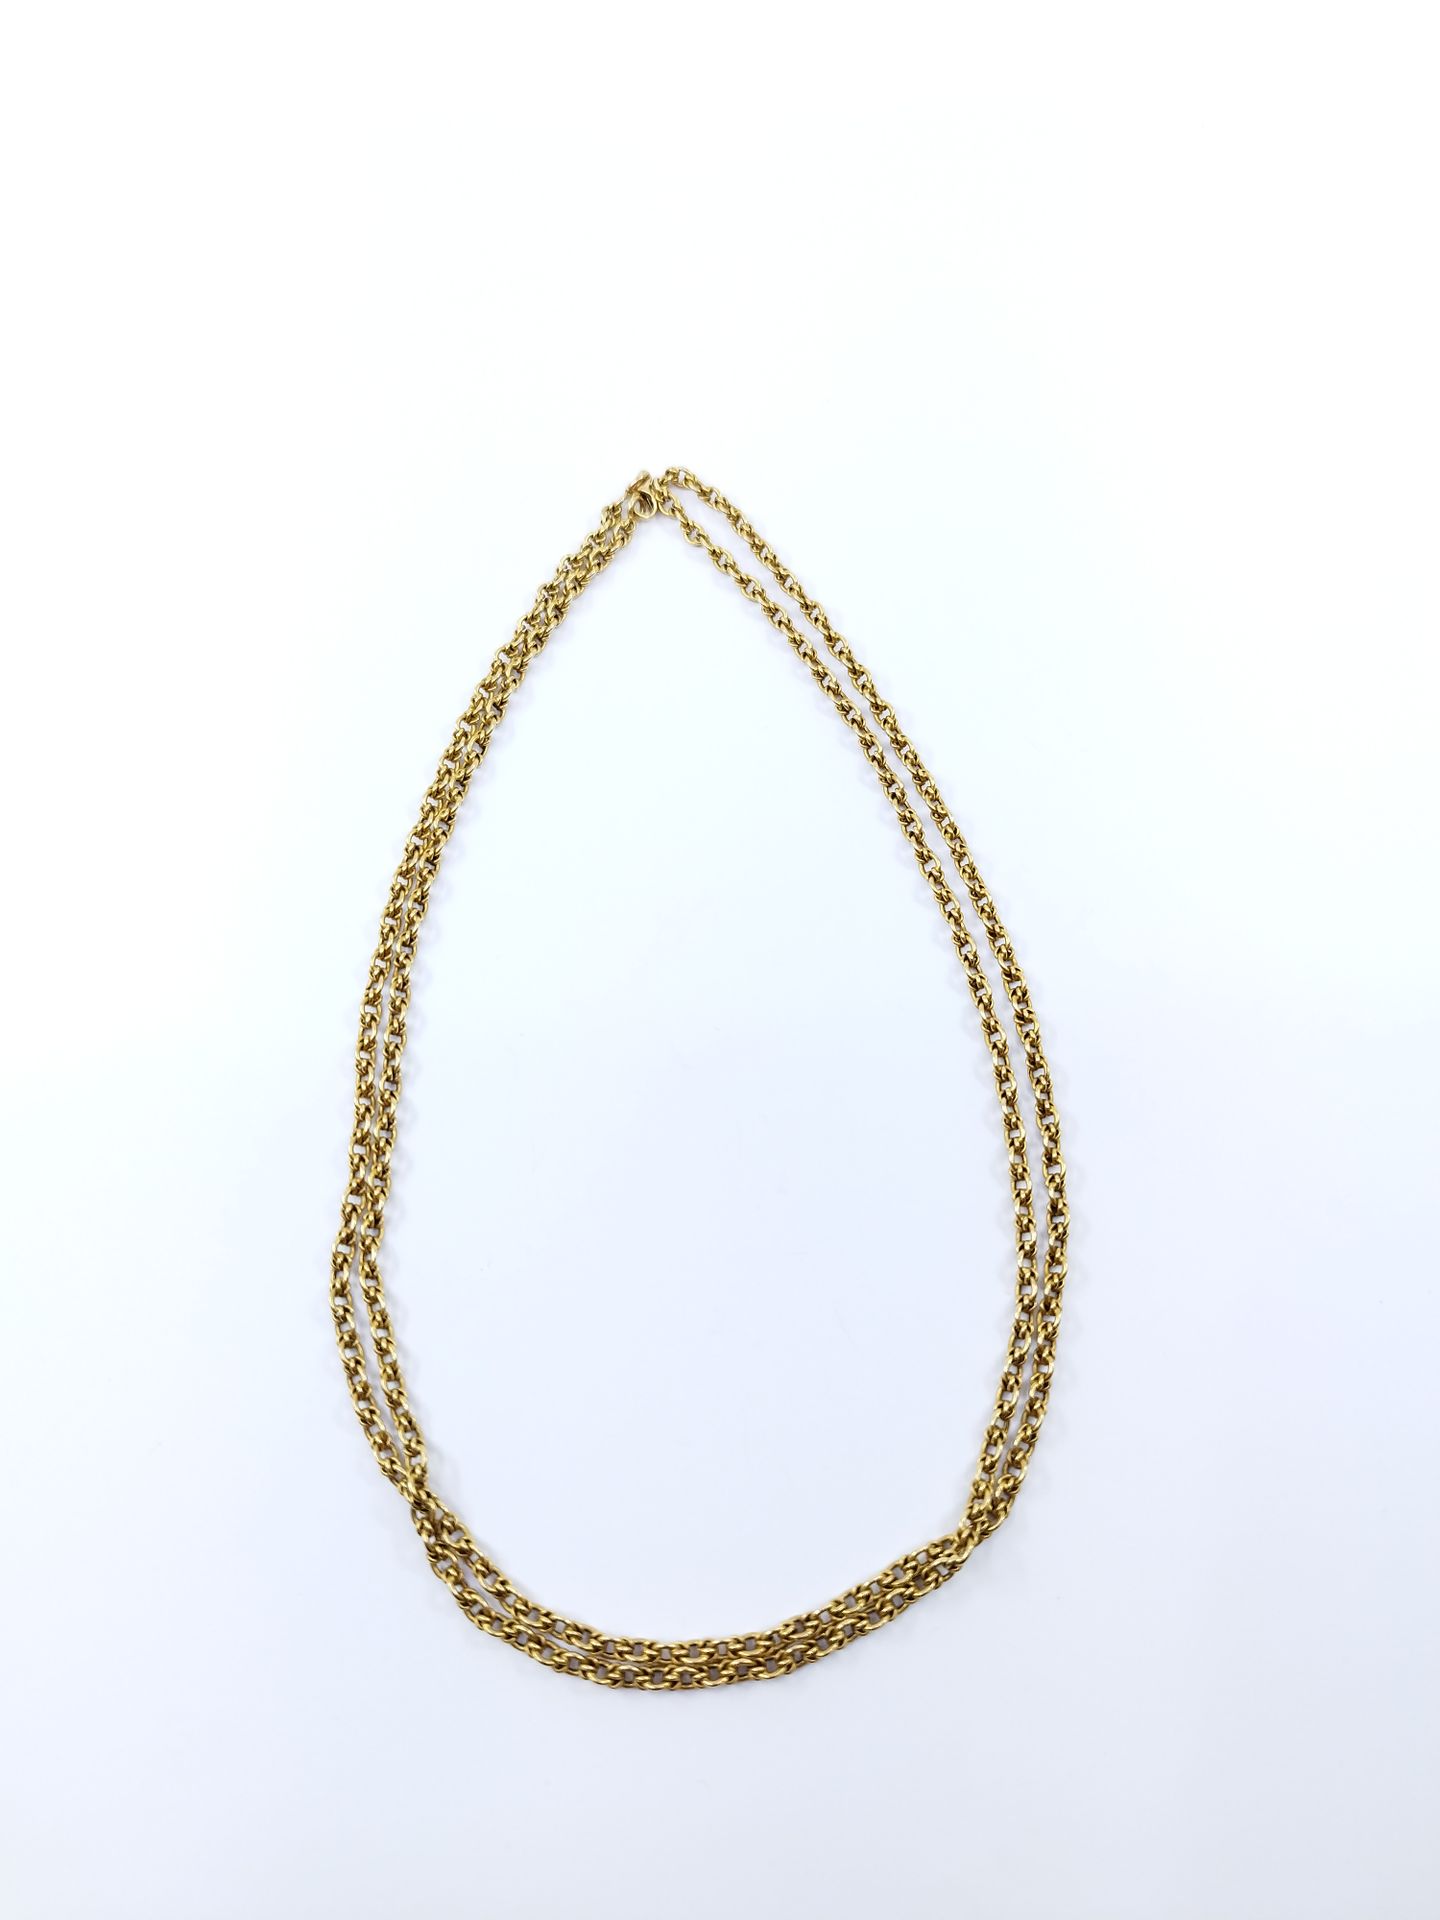 Null Collar largo de oro amarillo 750°. 

Sello búho

Peso : 13,21 g